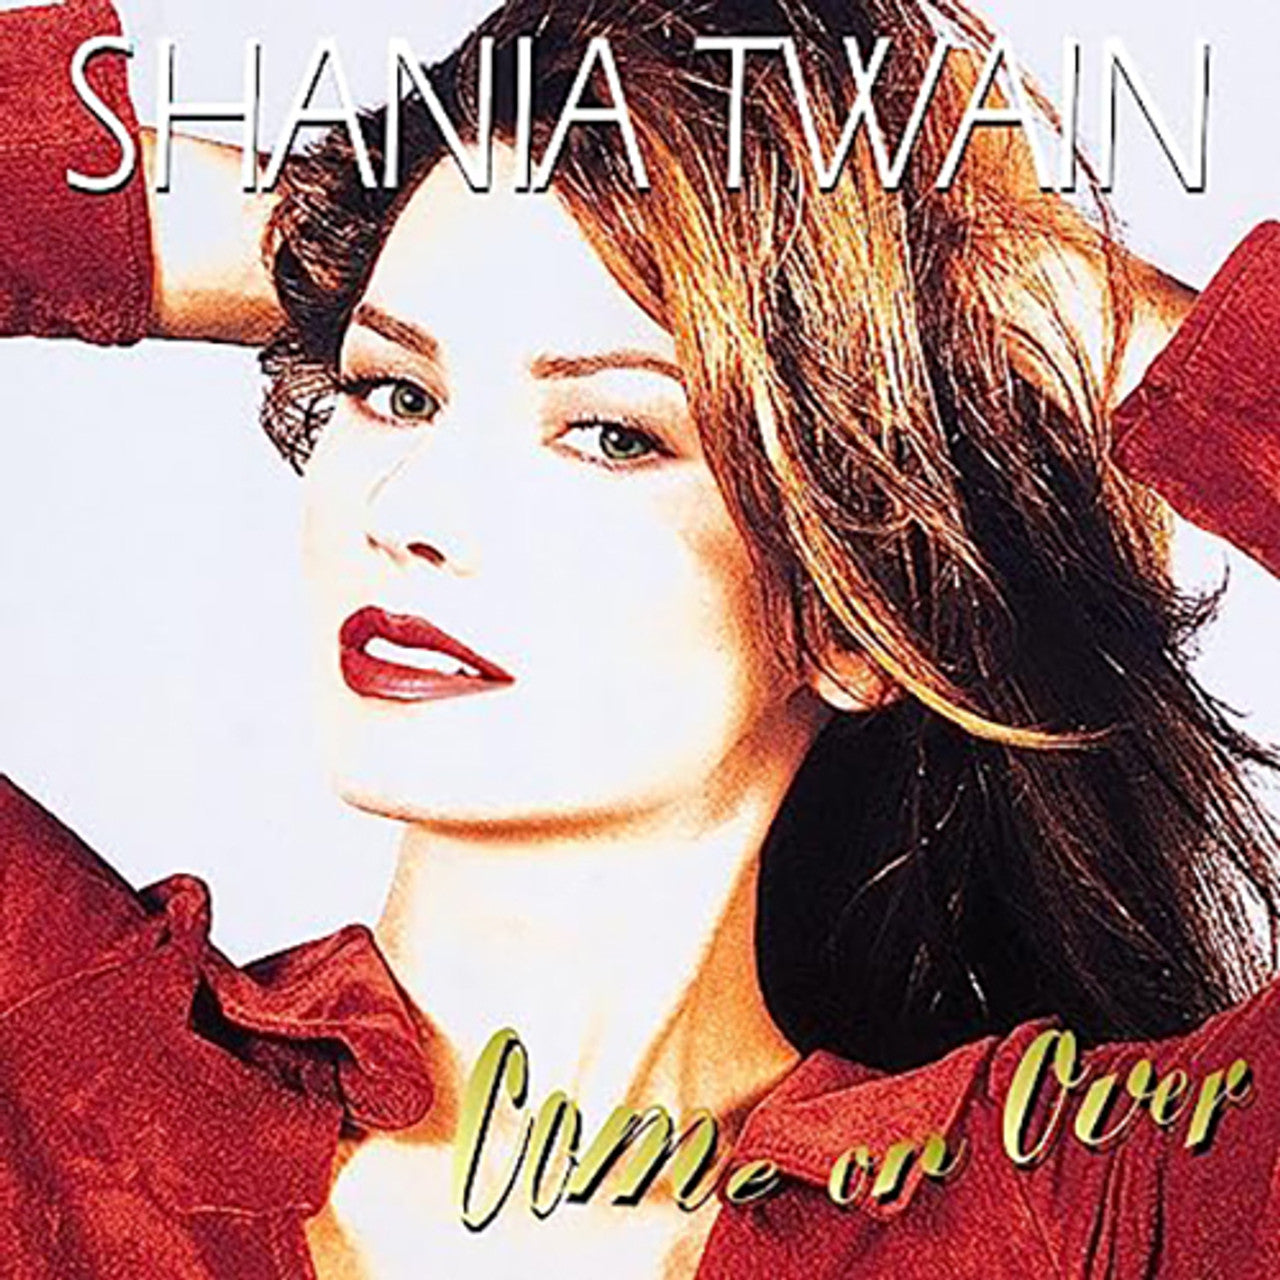 SHANIA TWAIN - COME ON OVER - 25TH ANNIVERSARY EDITION - 2-LP - VINYL LP